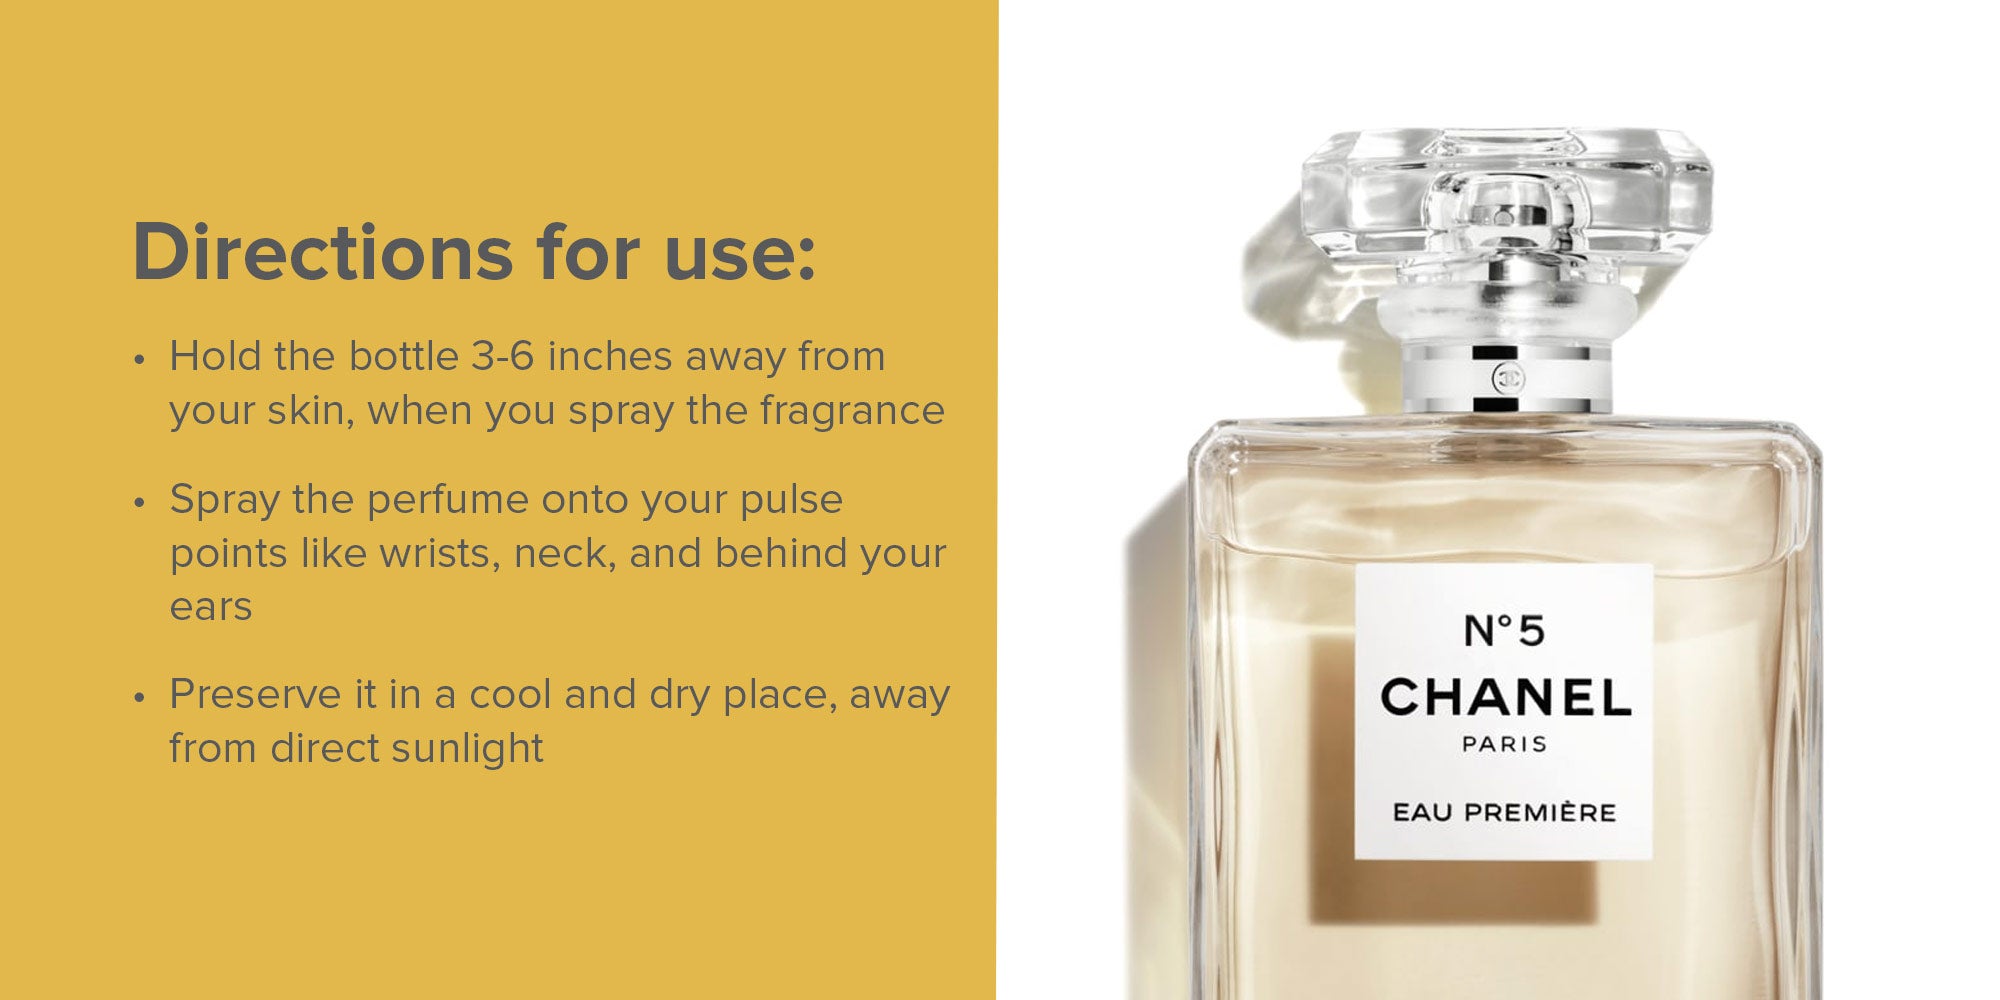 Chanel No 5 Eau Premiere (2015) Chanel perfume - a fragrance for